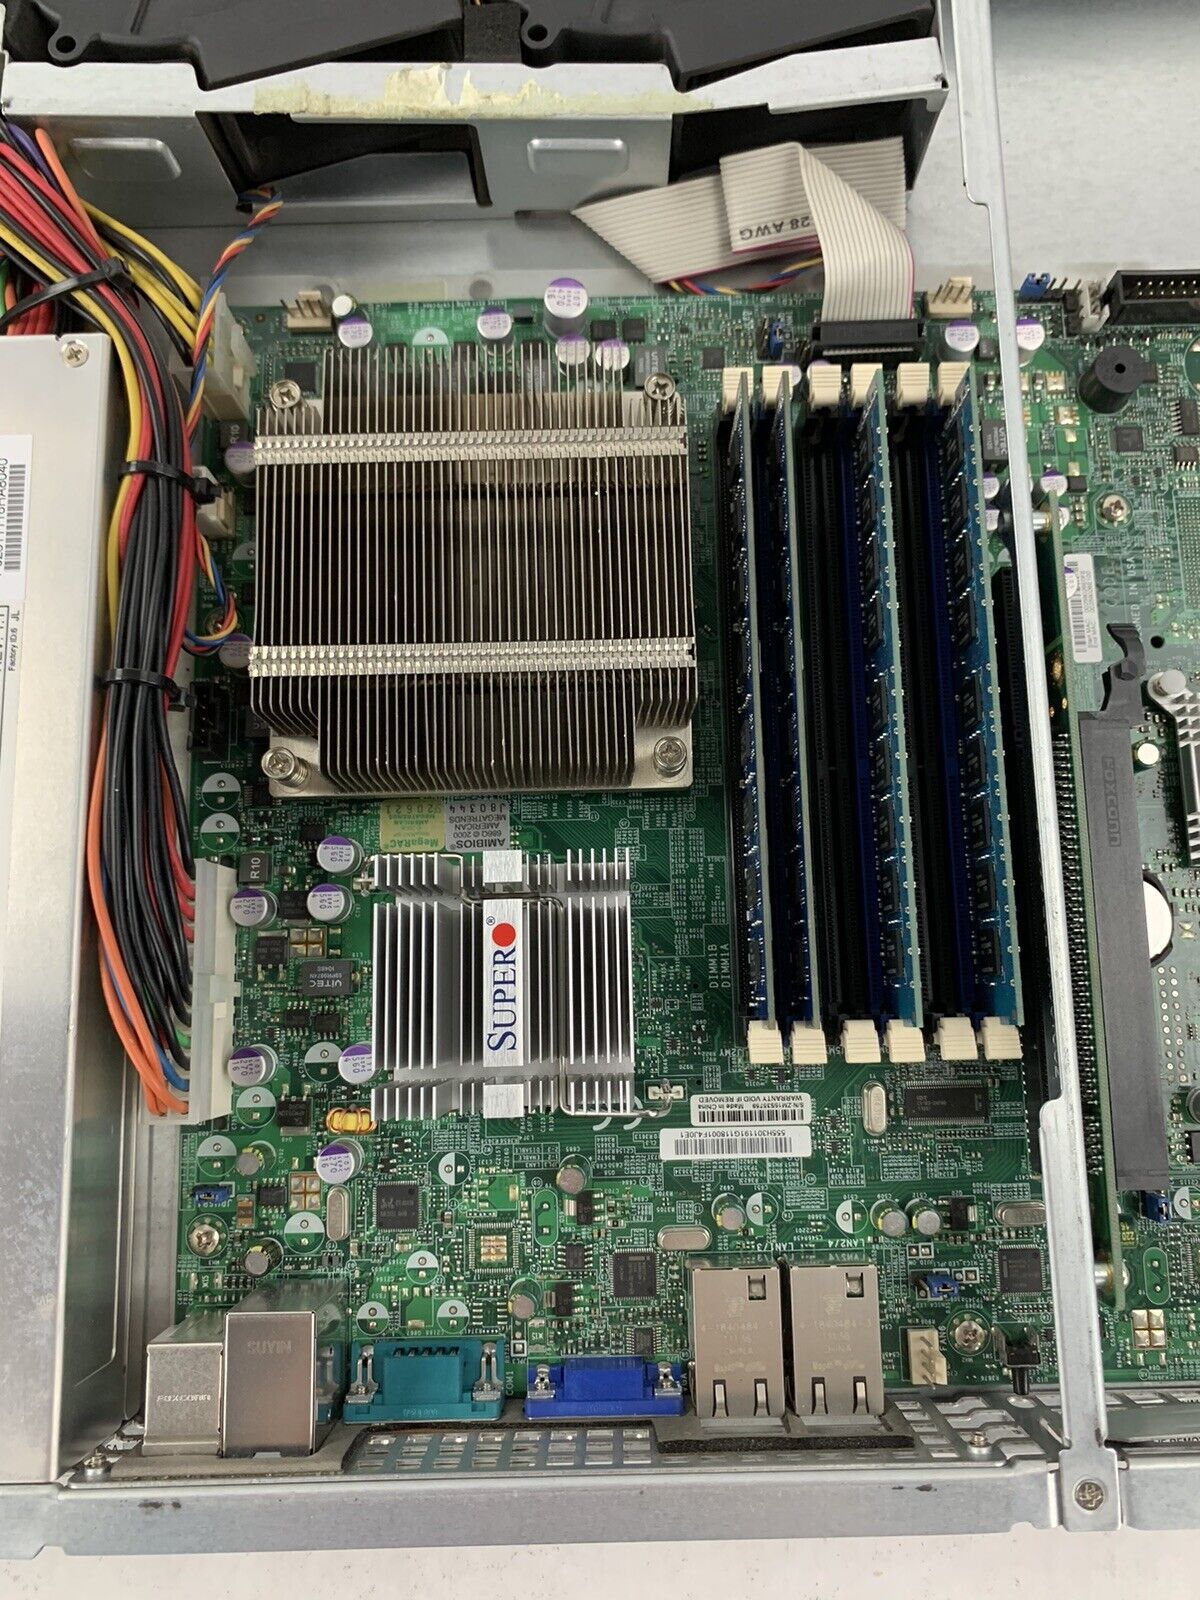 SuperMicro X8STI, Xeon L5630, 2.13GHz, 16G ram, NO OS or HDD, TESTED.